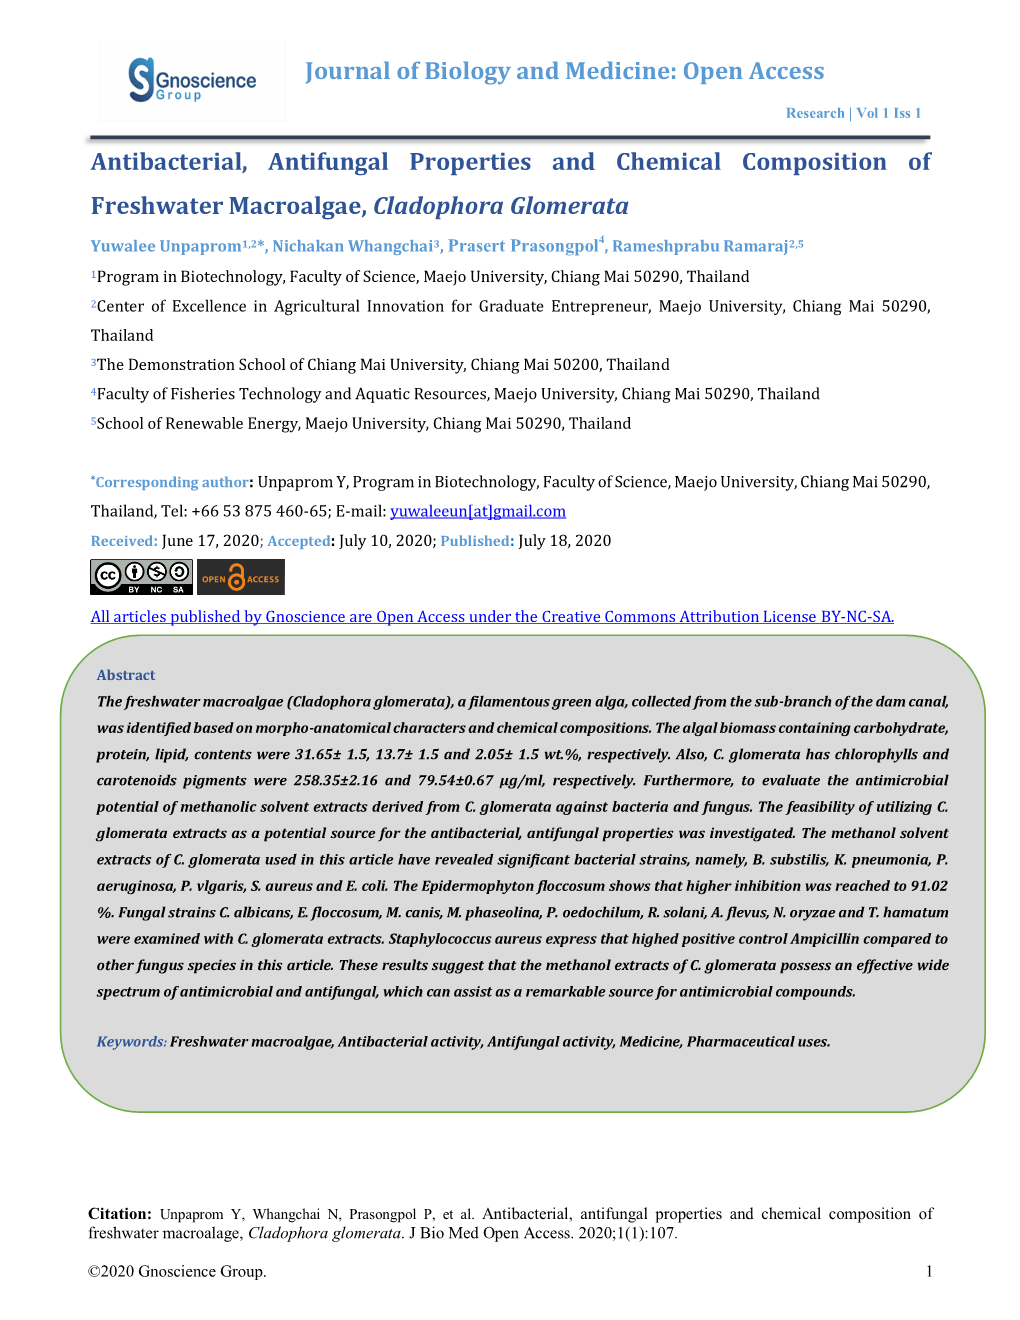 Antibacterial, Antifungal Properties and Chemical Composition of Freshwater Macroalgae, Cladophora Glomerata